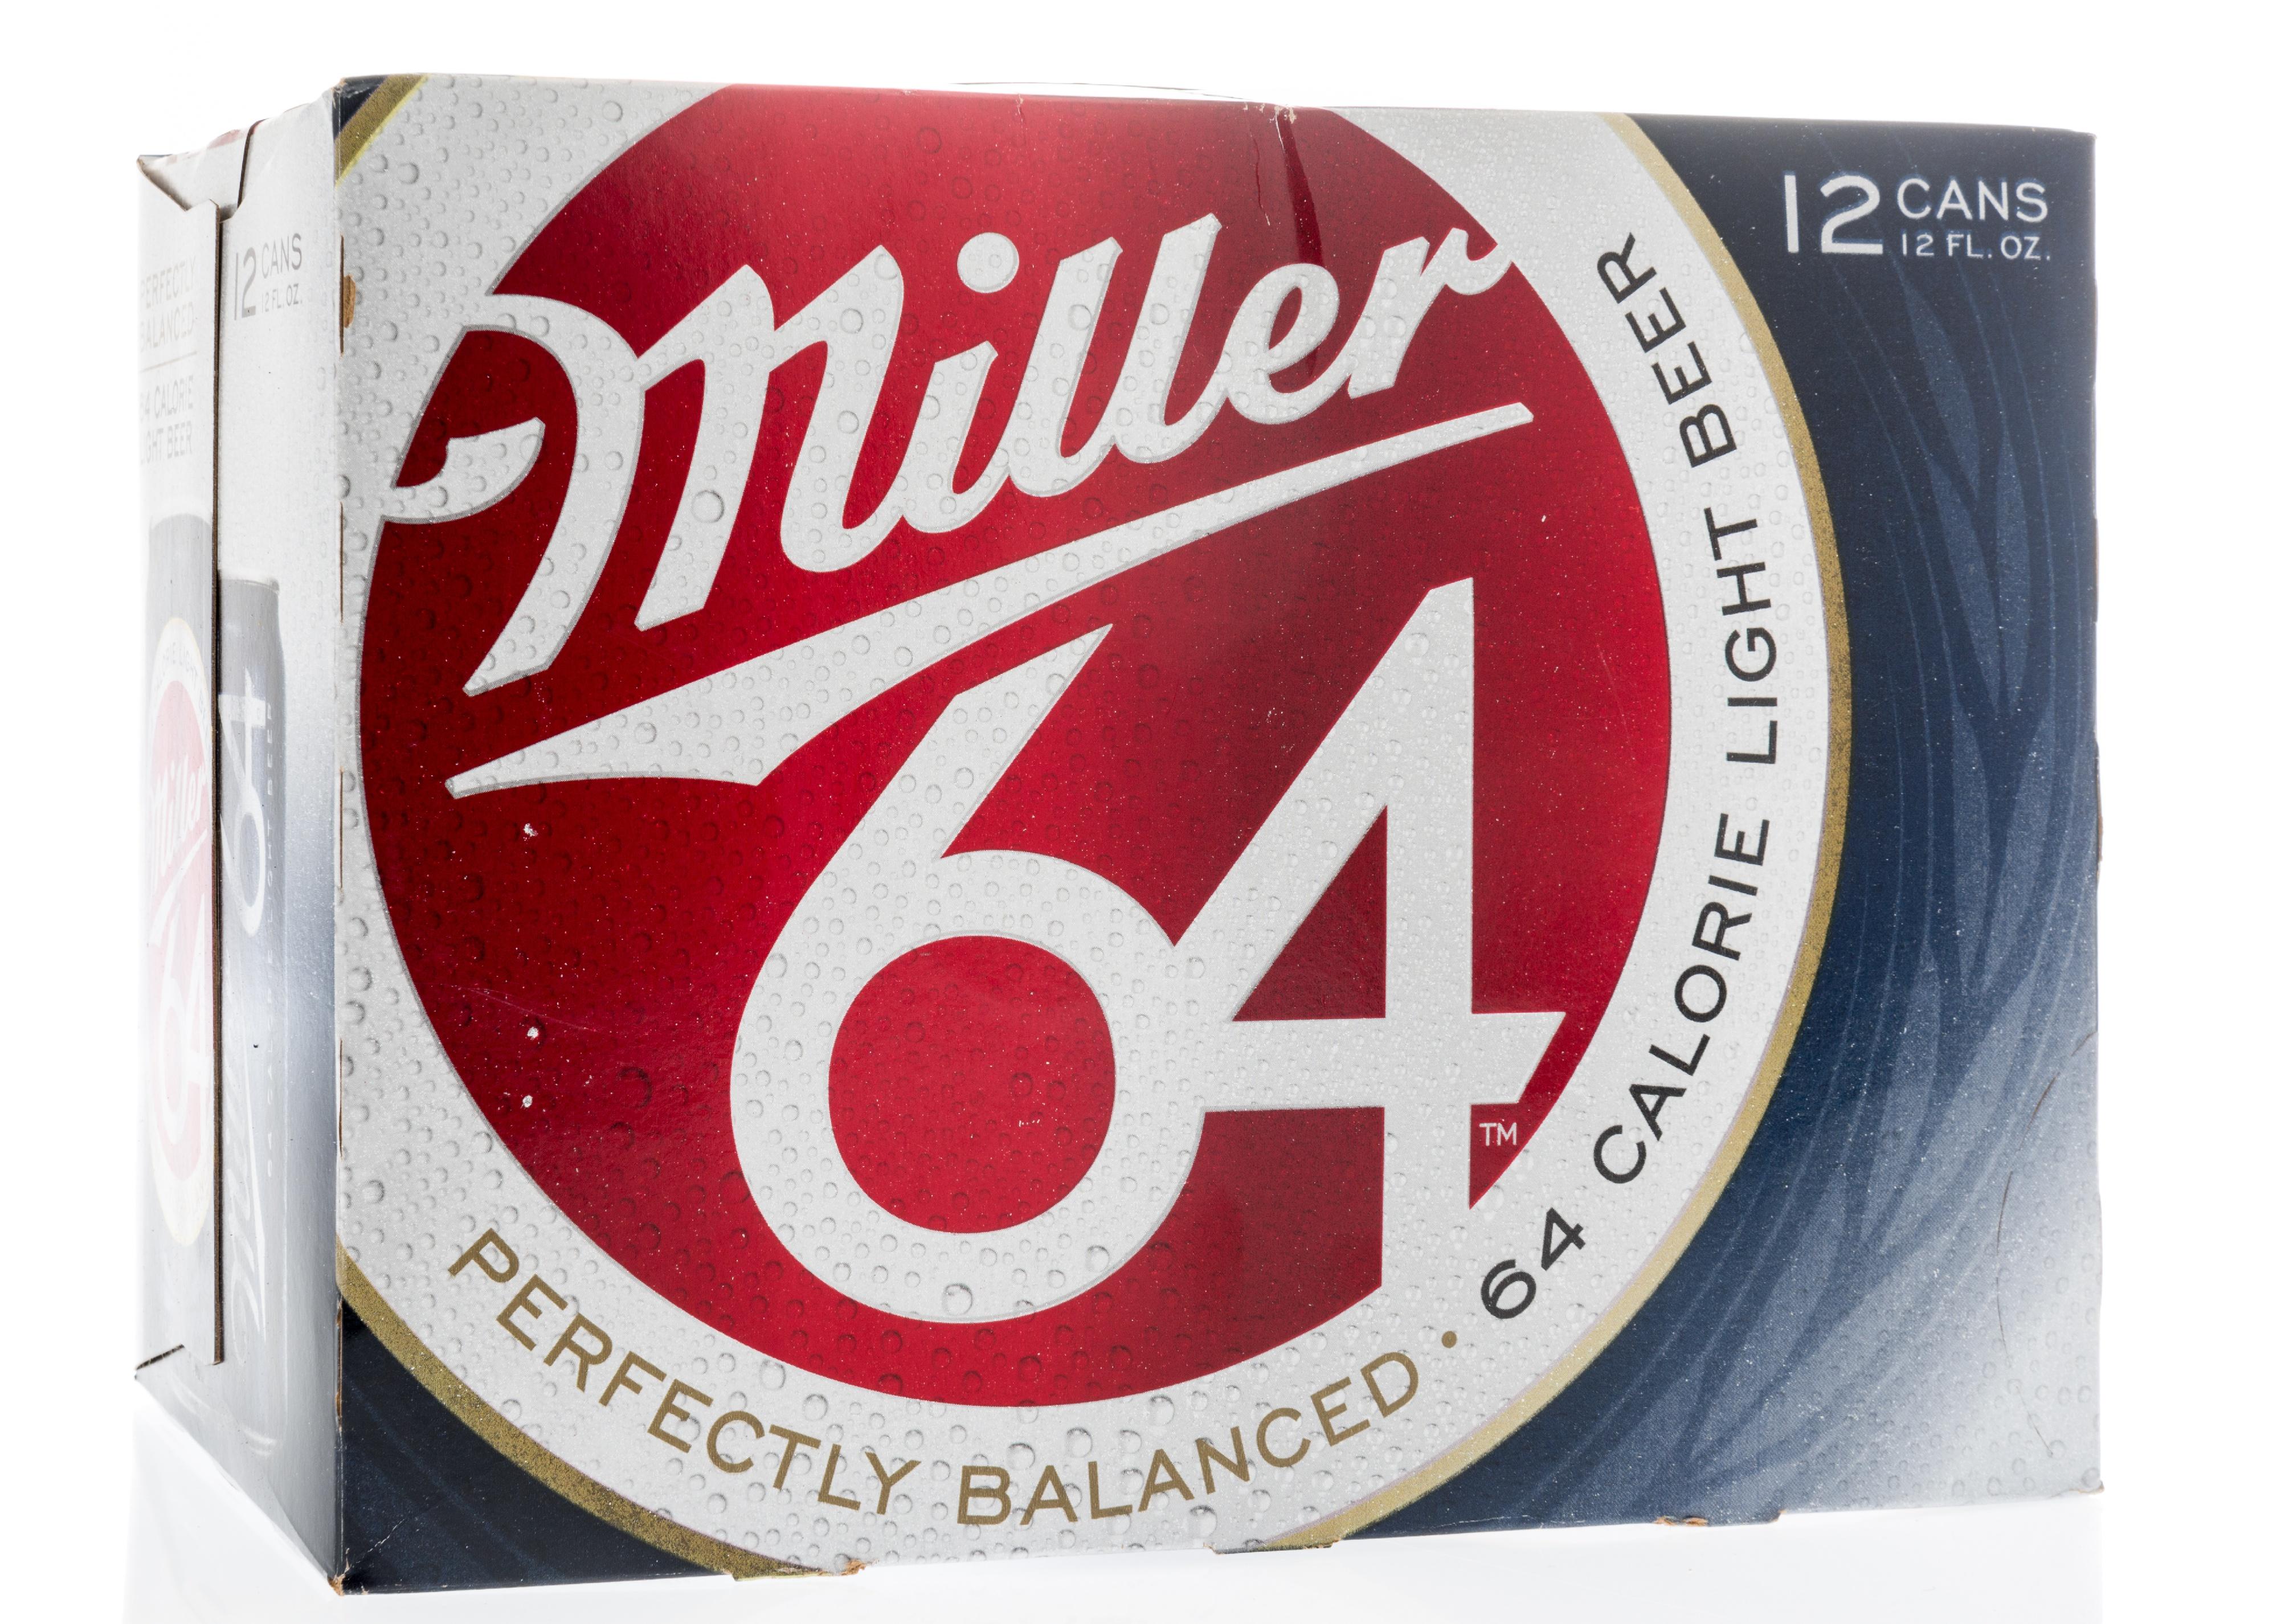 A 12 pack of Miller 64 lite beer